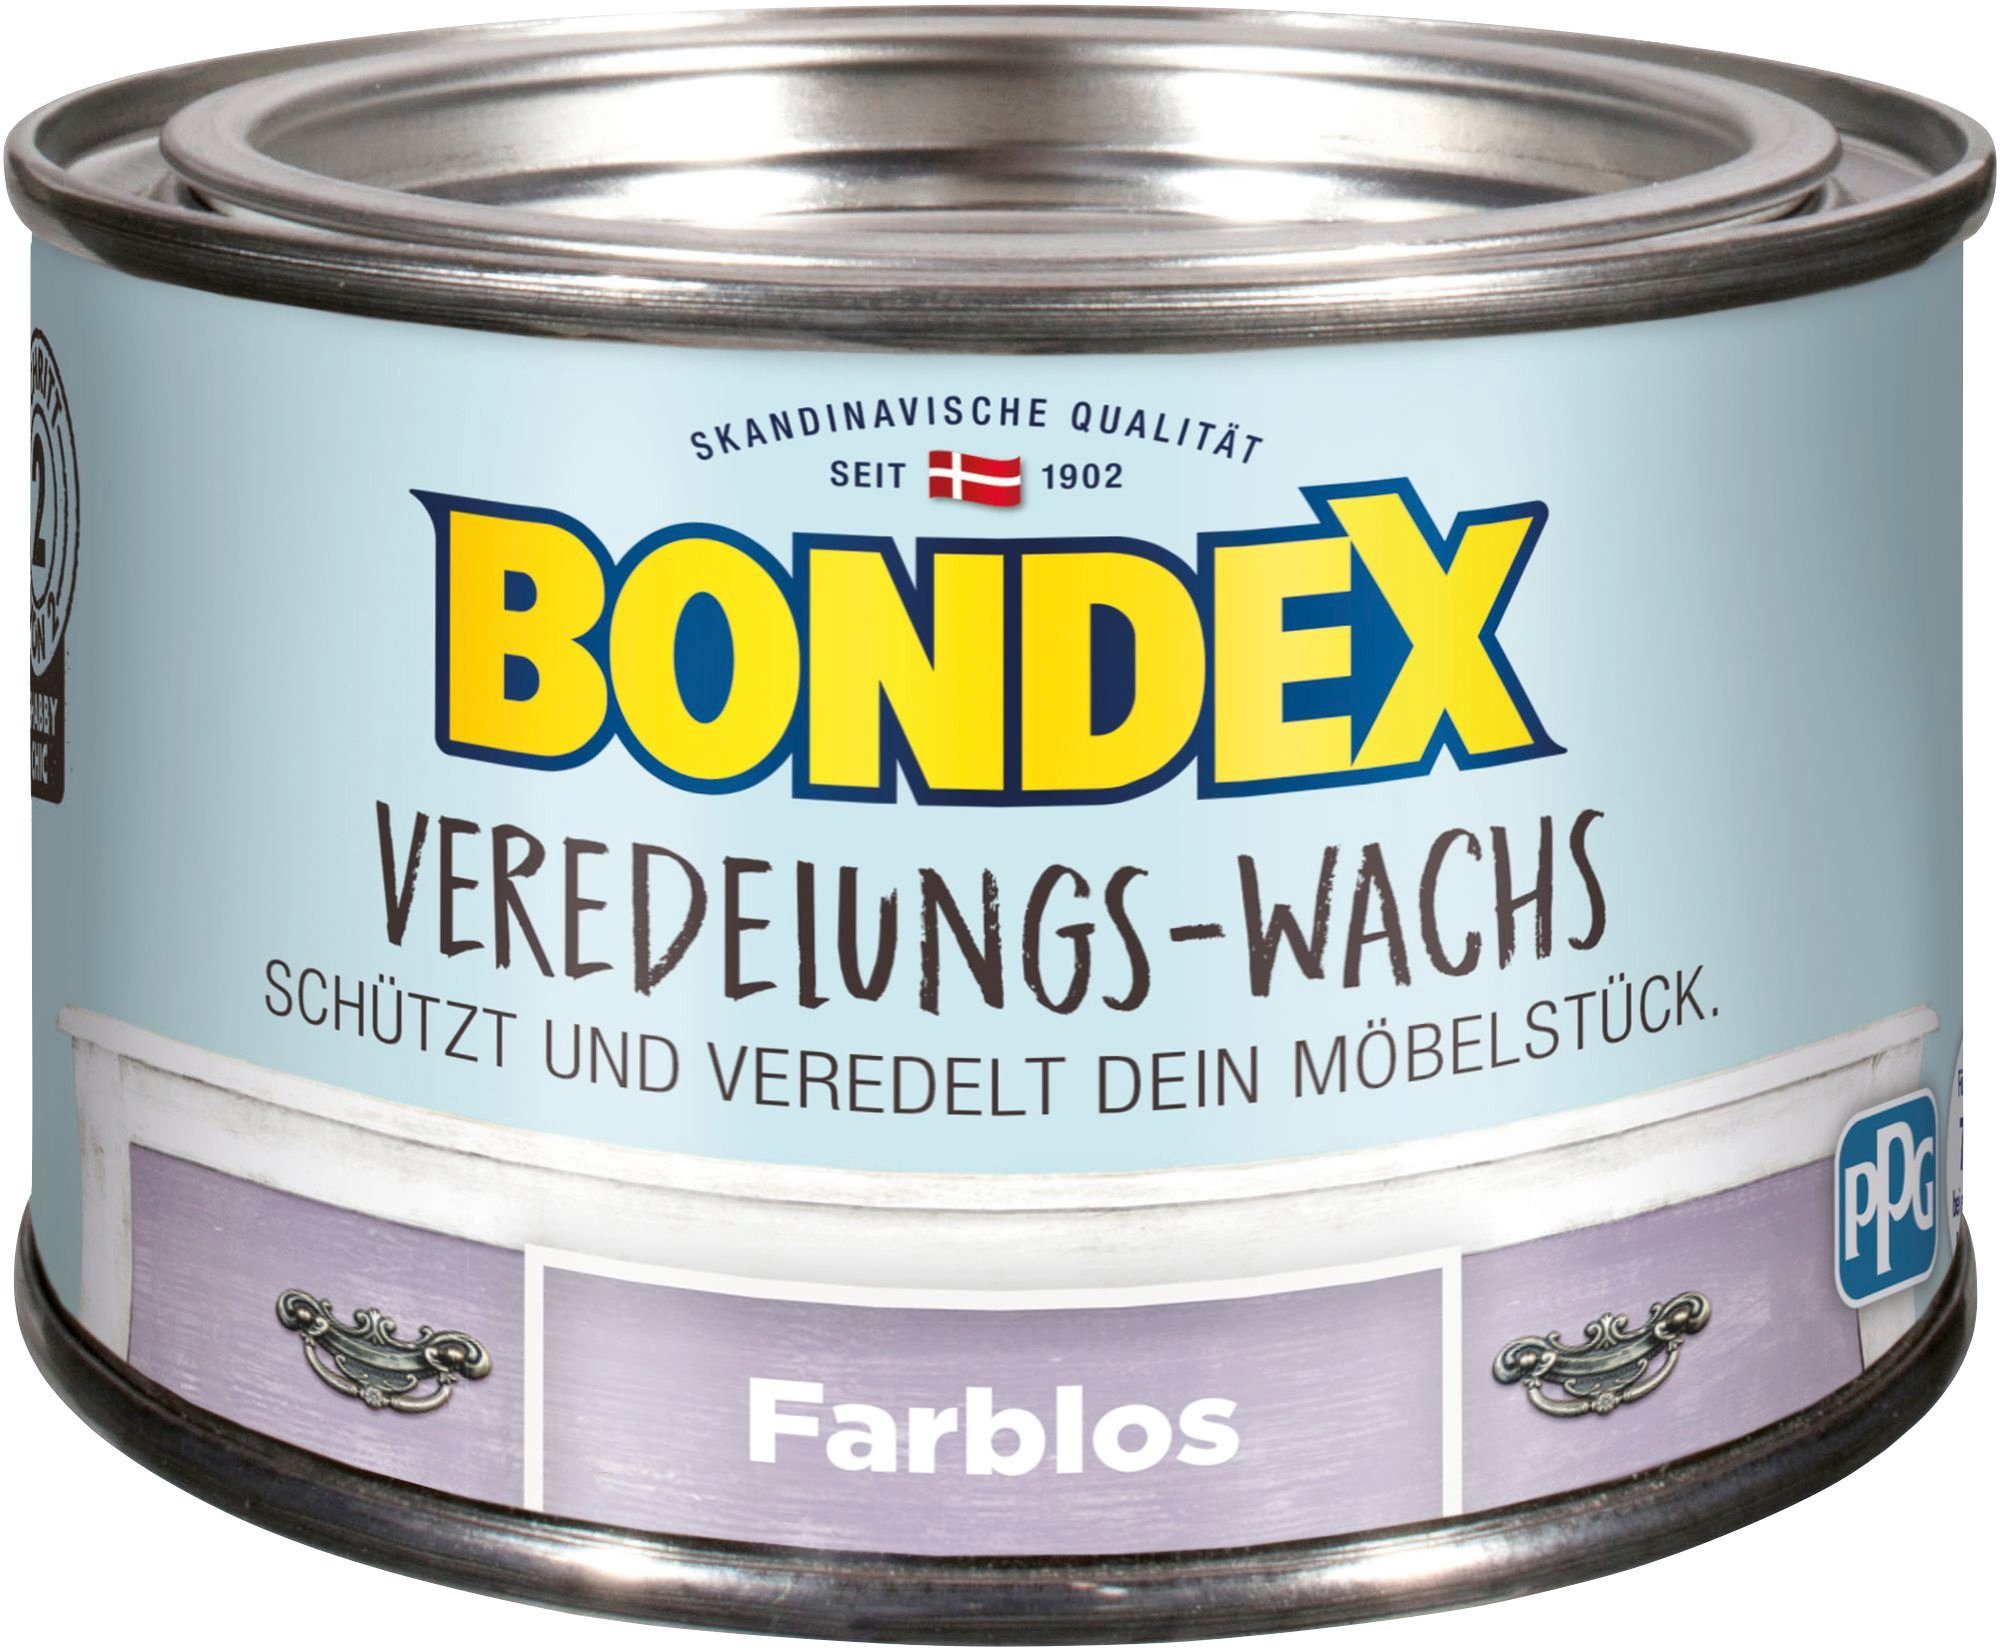 Bondex VEREDELUNGS-WACHS Transparent Holzpflegeöl, 0,25 l